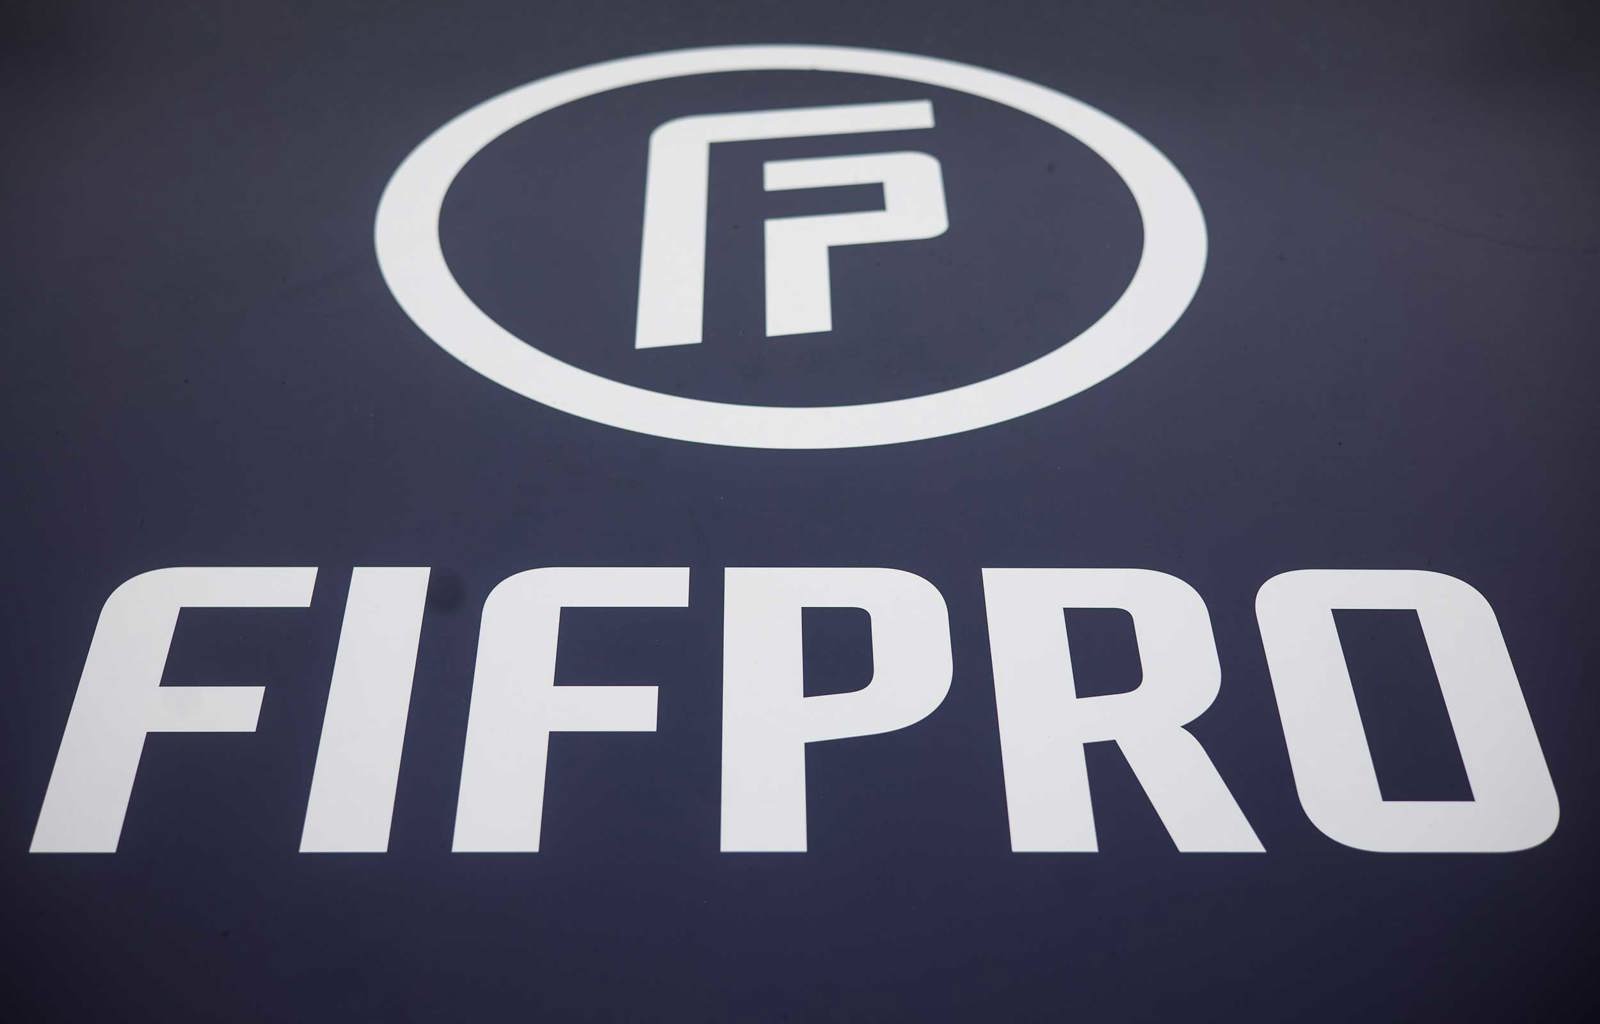 FIFPRO Logo Sign